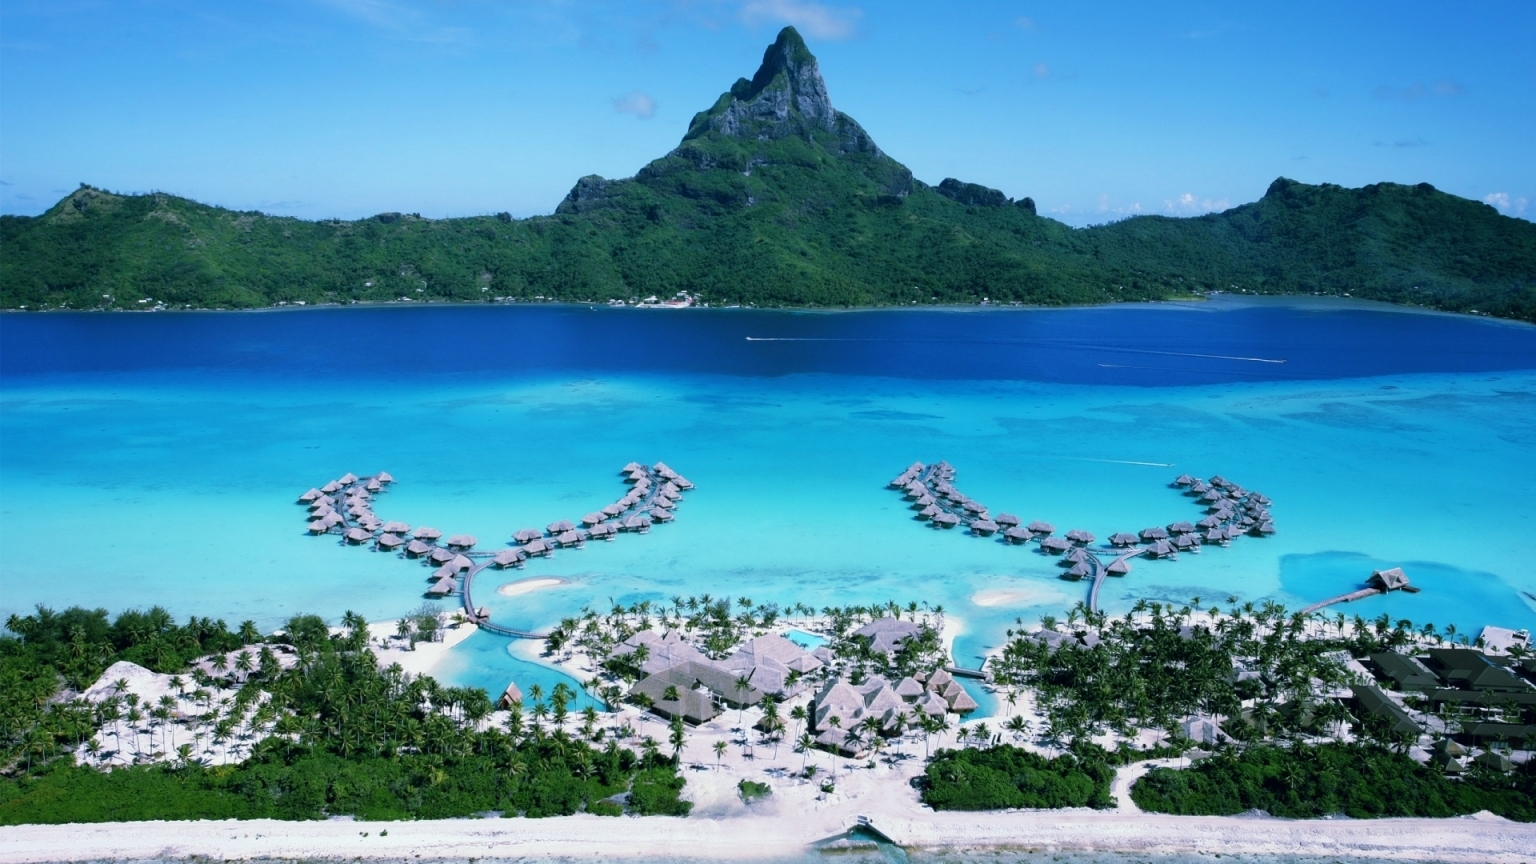 Four Seasons Bora Bora Resort for 1536 x 864 HDTV resolution